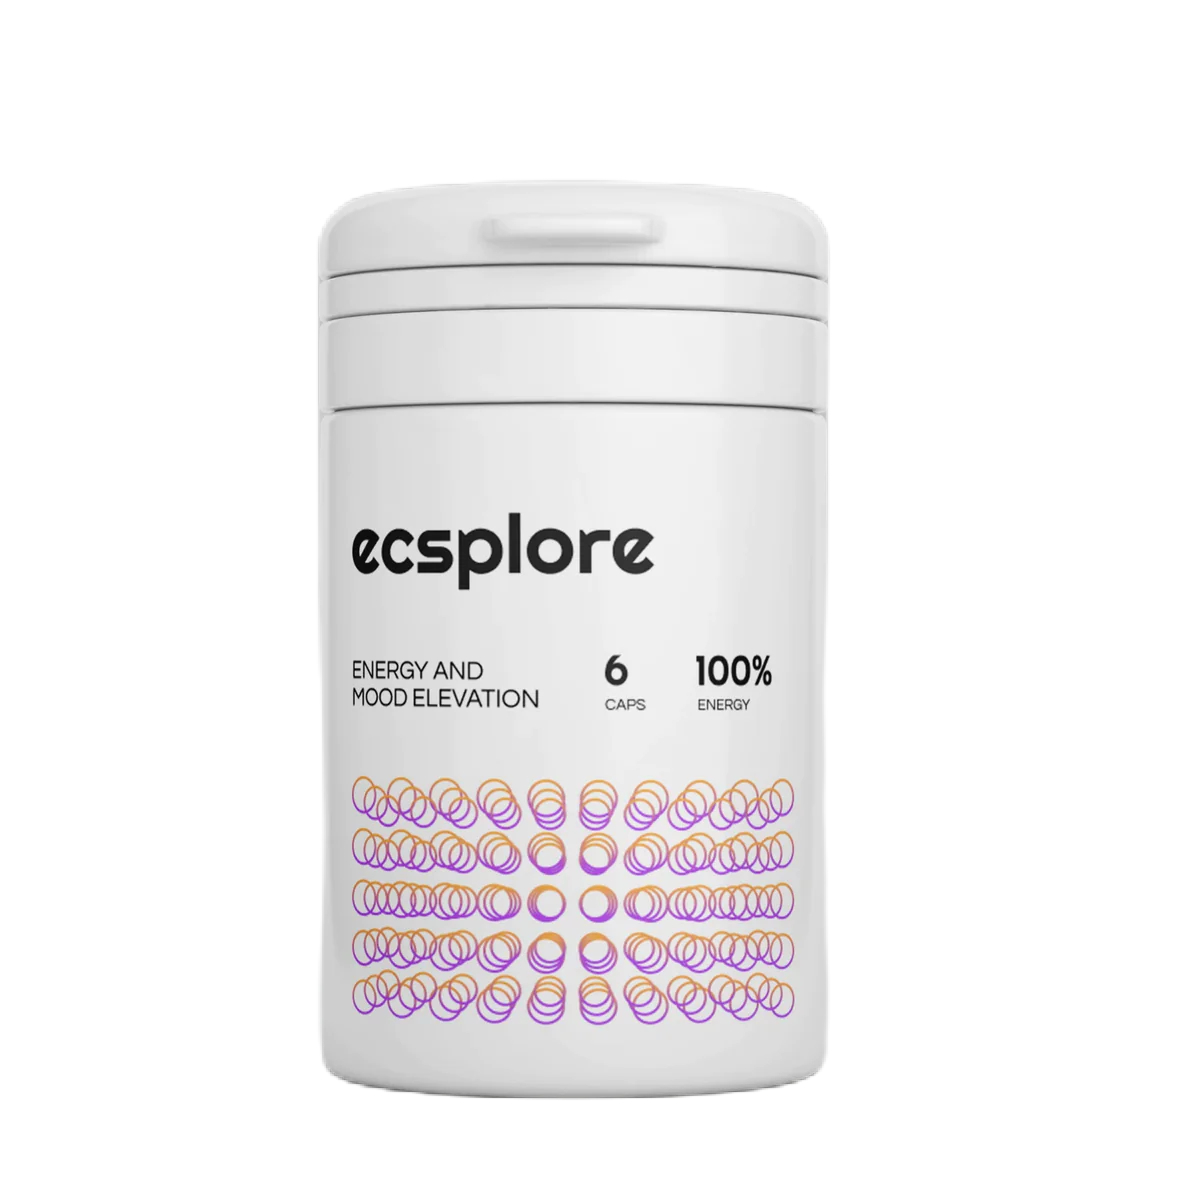 Ecsplore energy and mood elevation capsules